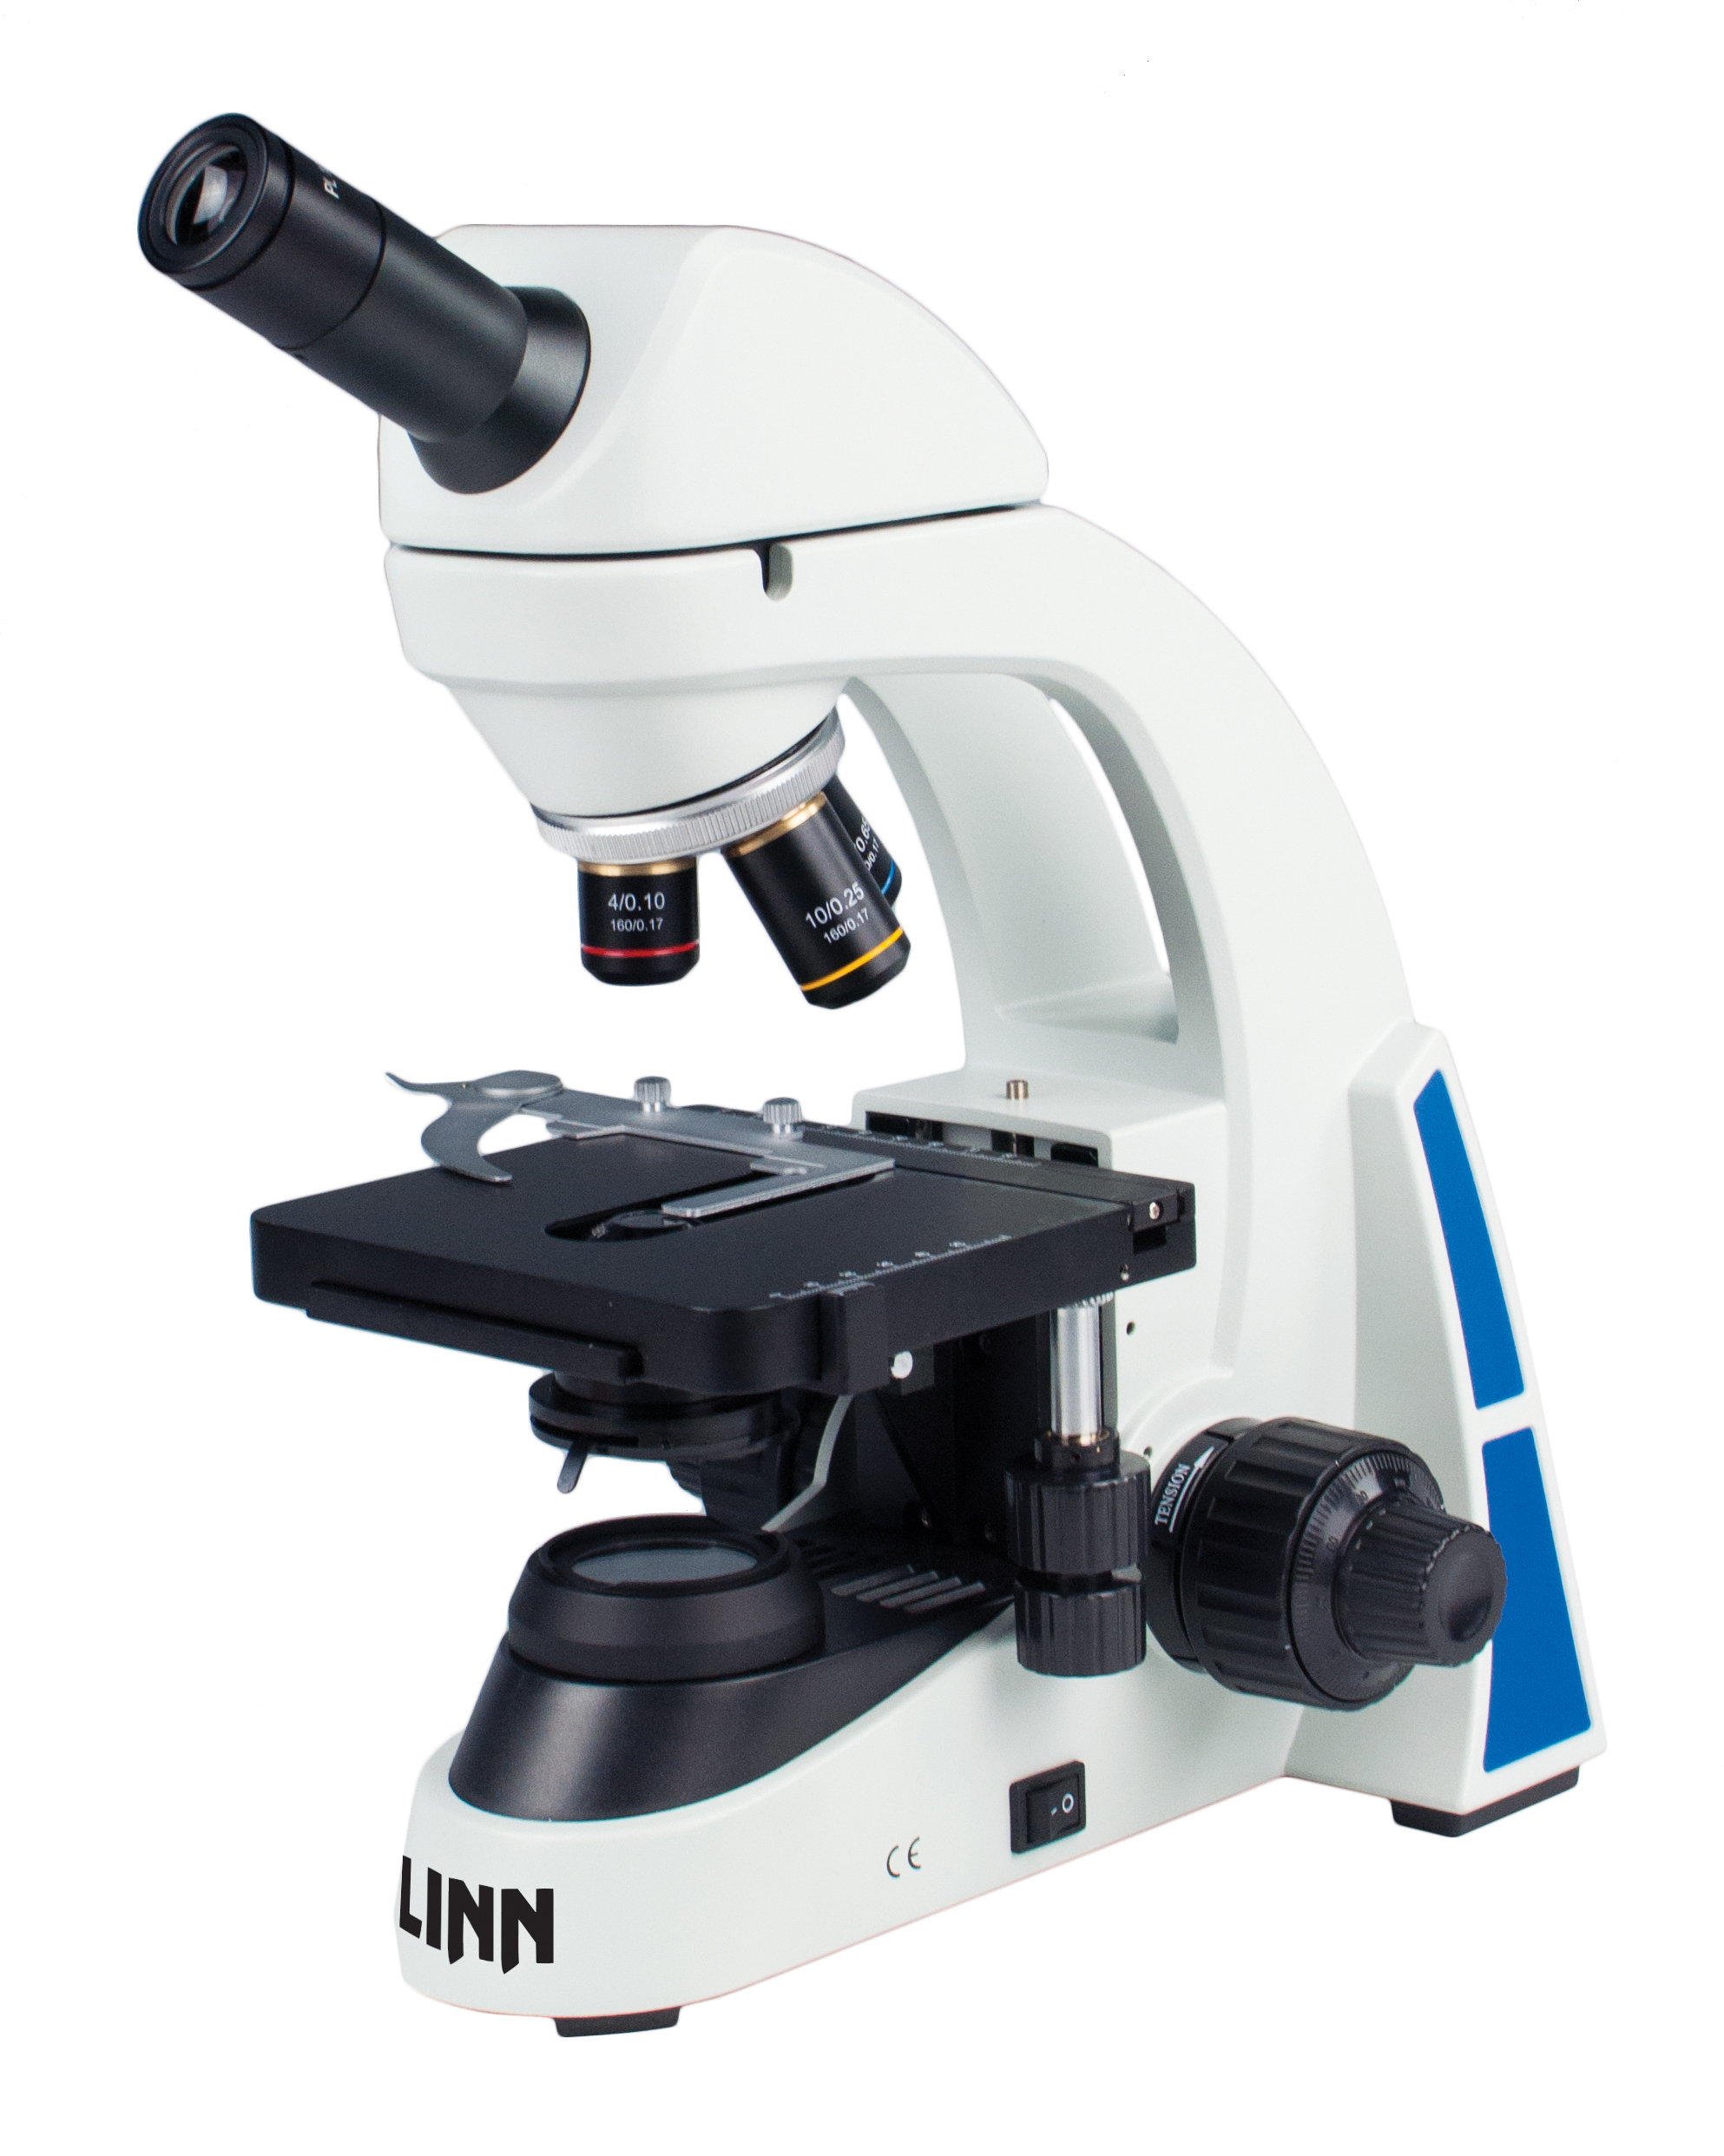 Flinn Advanced Compound Microscope, 4X, 10X, 40X